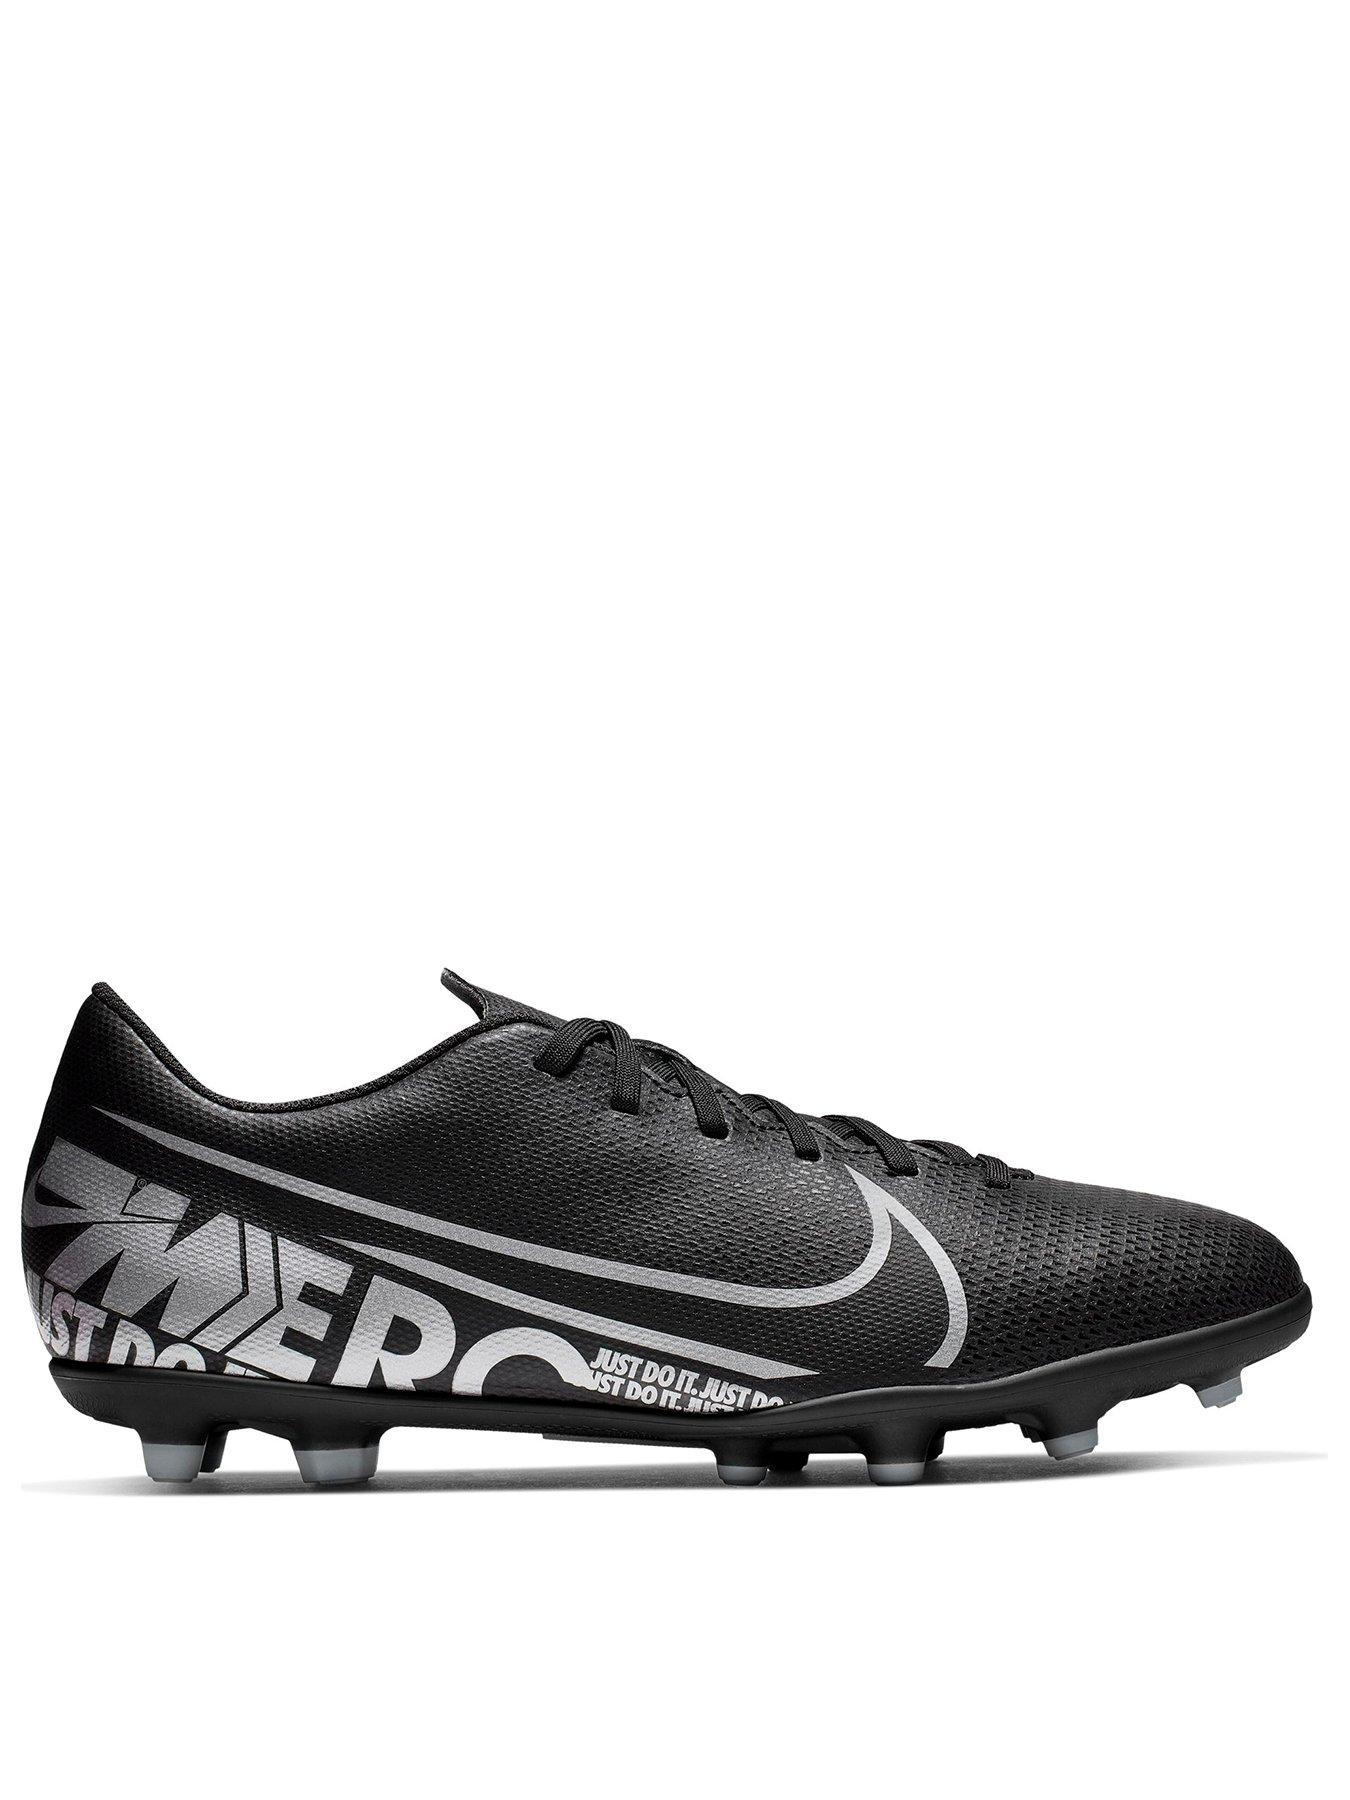 Sepatu Bola Soccer Nike Mercurial Vapor 13 Elite NJR.